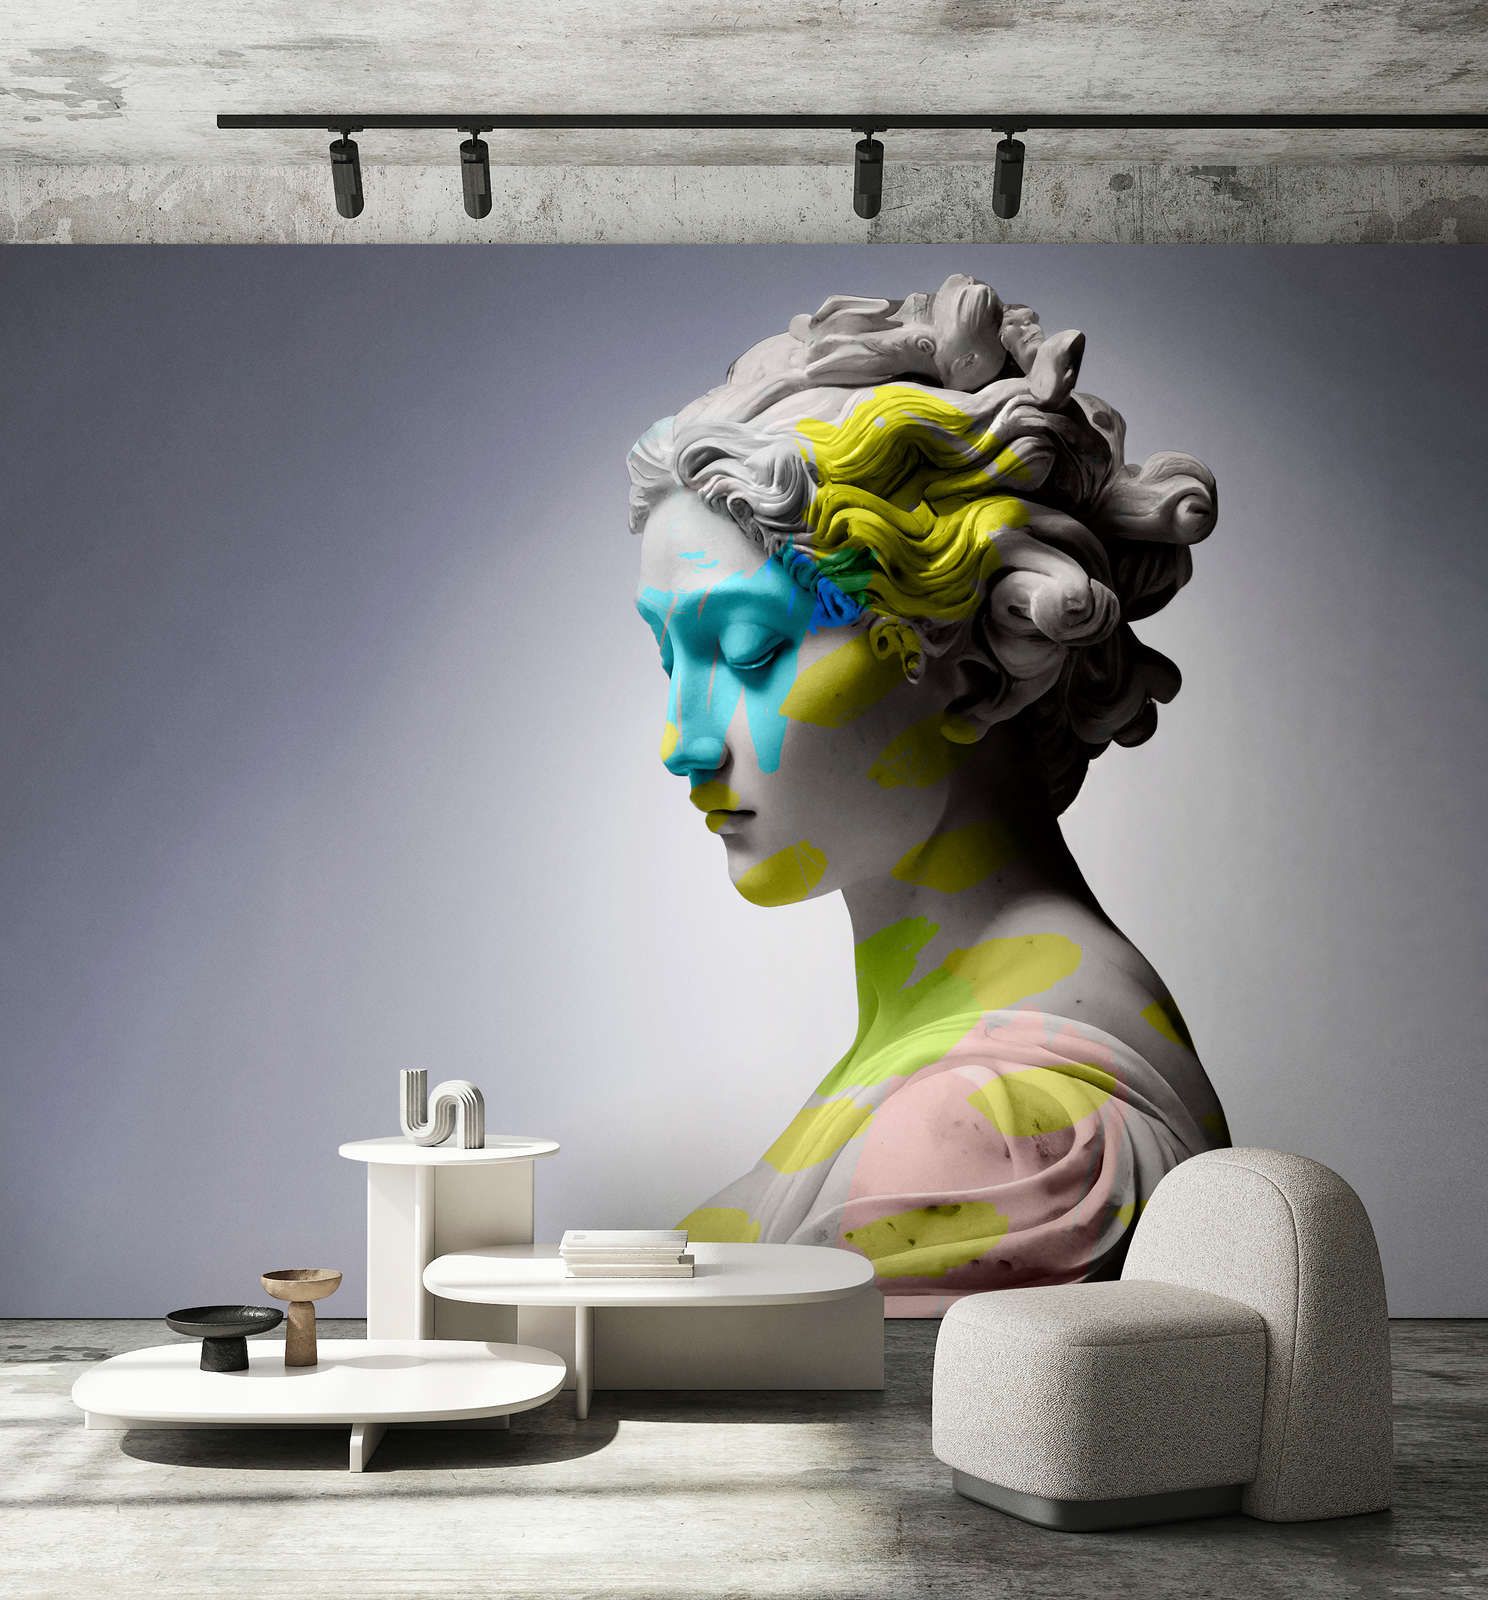             Photo wallpaper »clio« - female sculpture with colourful accents - matt, smooth non-woven fabric
        